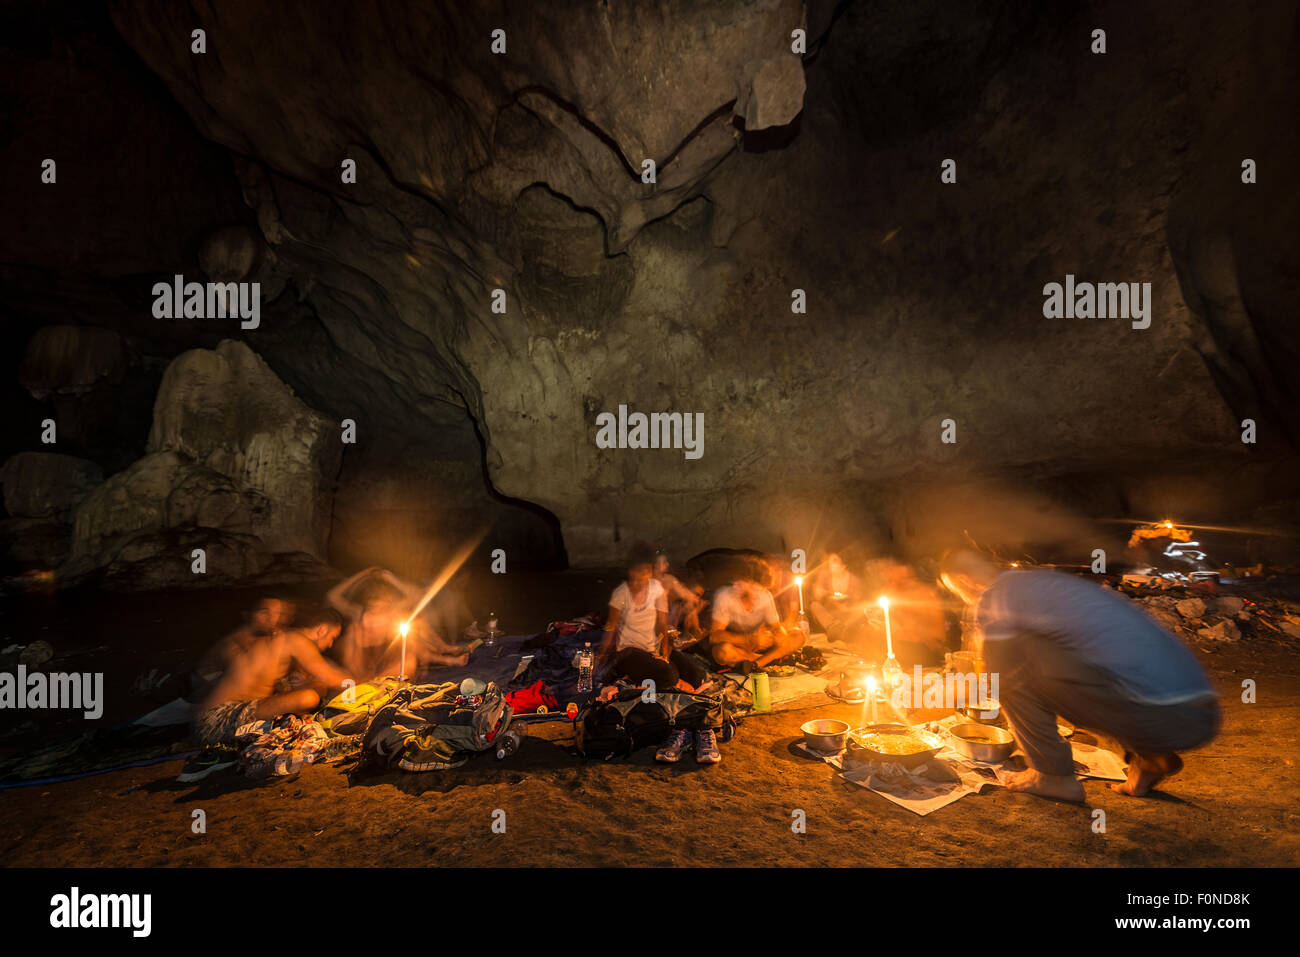 Hikers, tourists sleeping in a cave with a campfire, Kuala Tahan, Taman Negara National Park, Malaysia Stock Photo